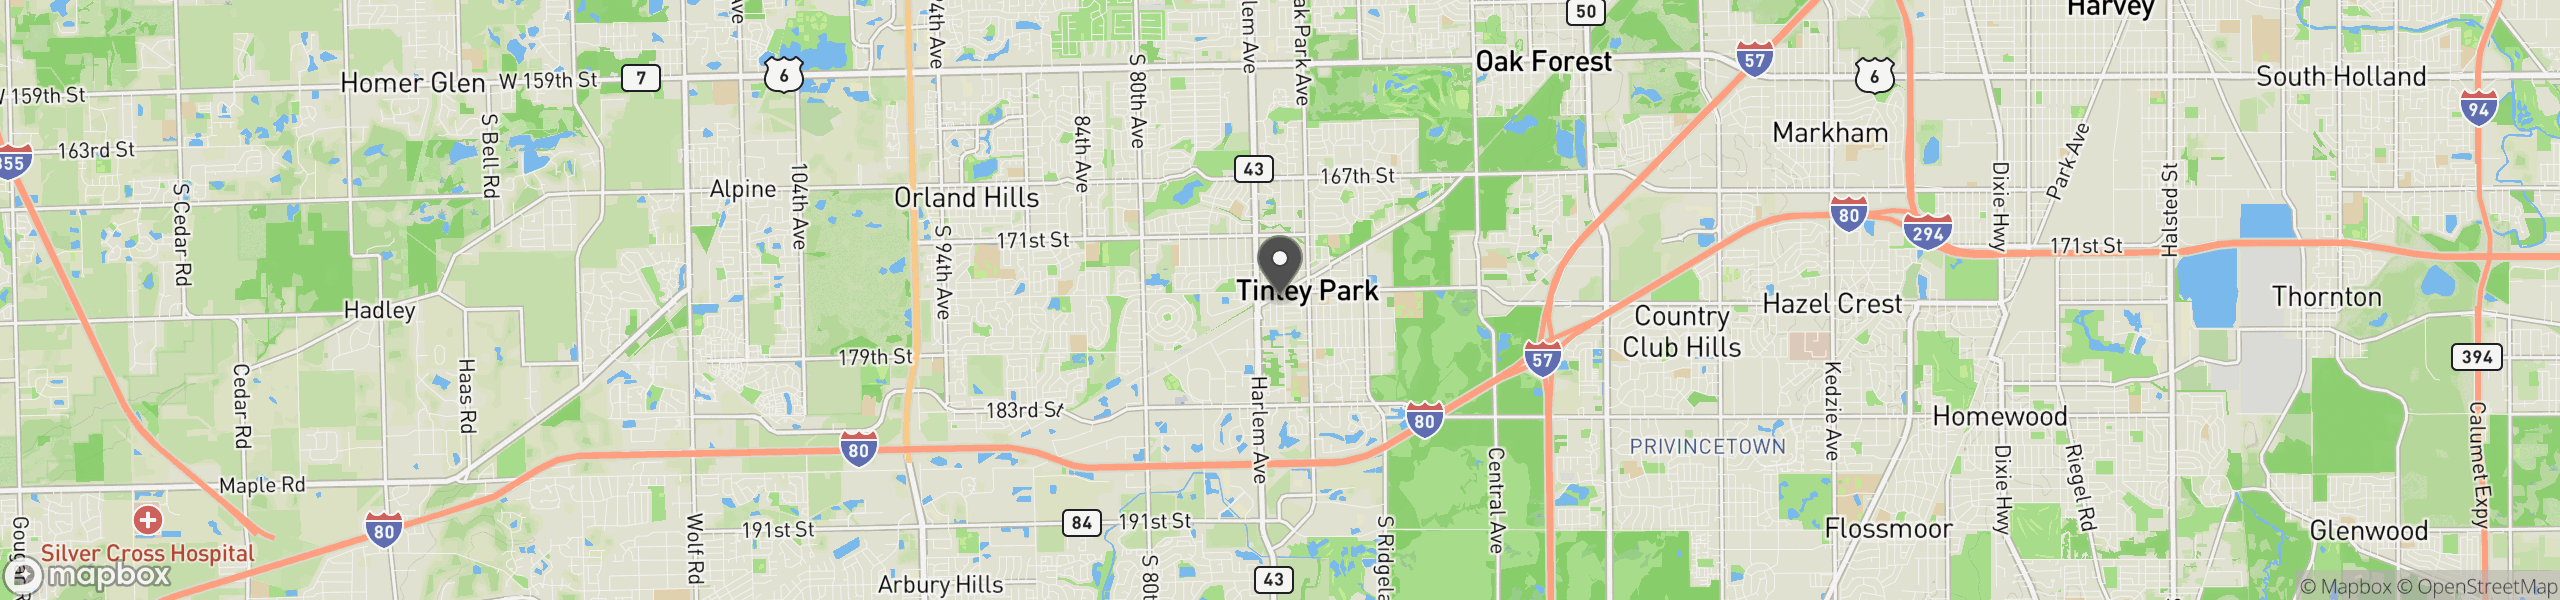 Tinley Park, IL